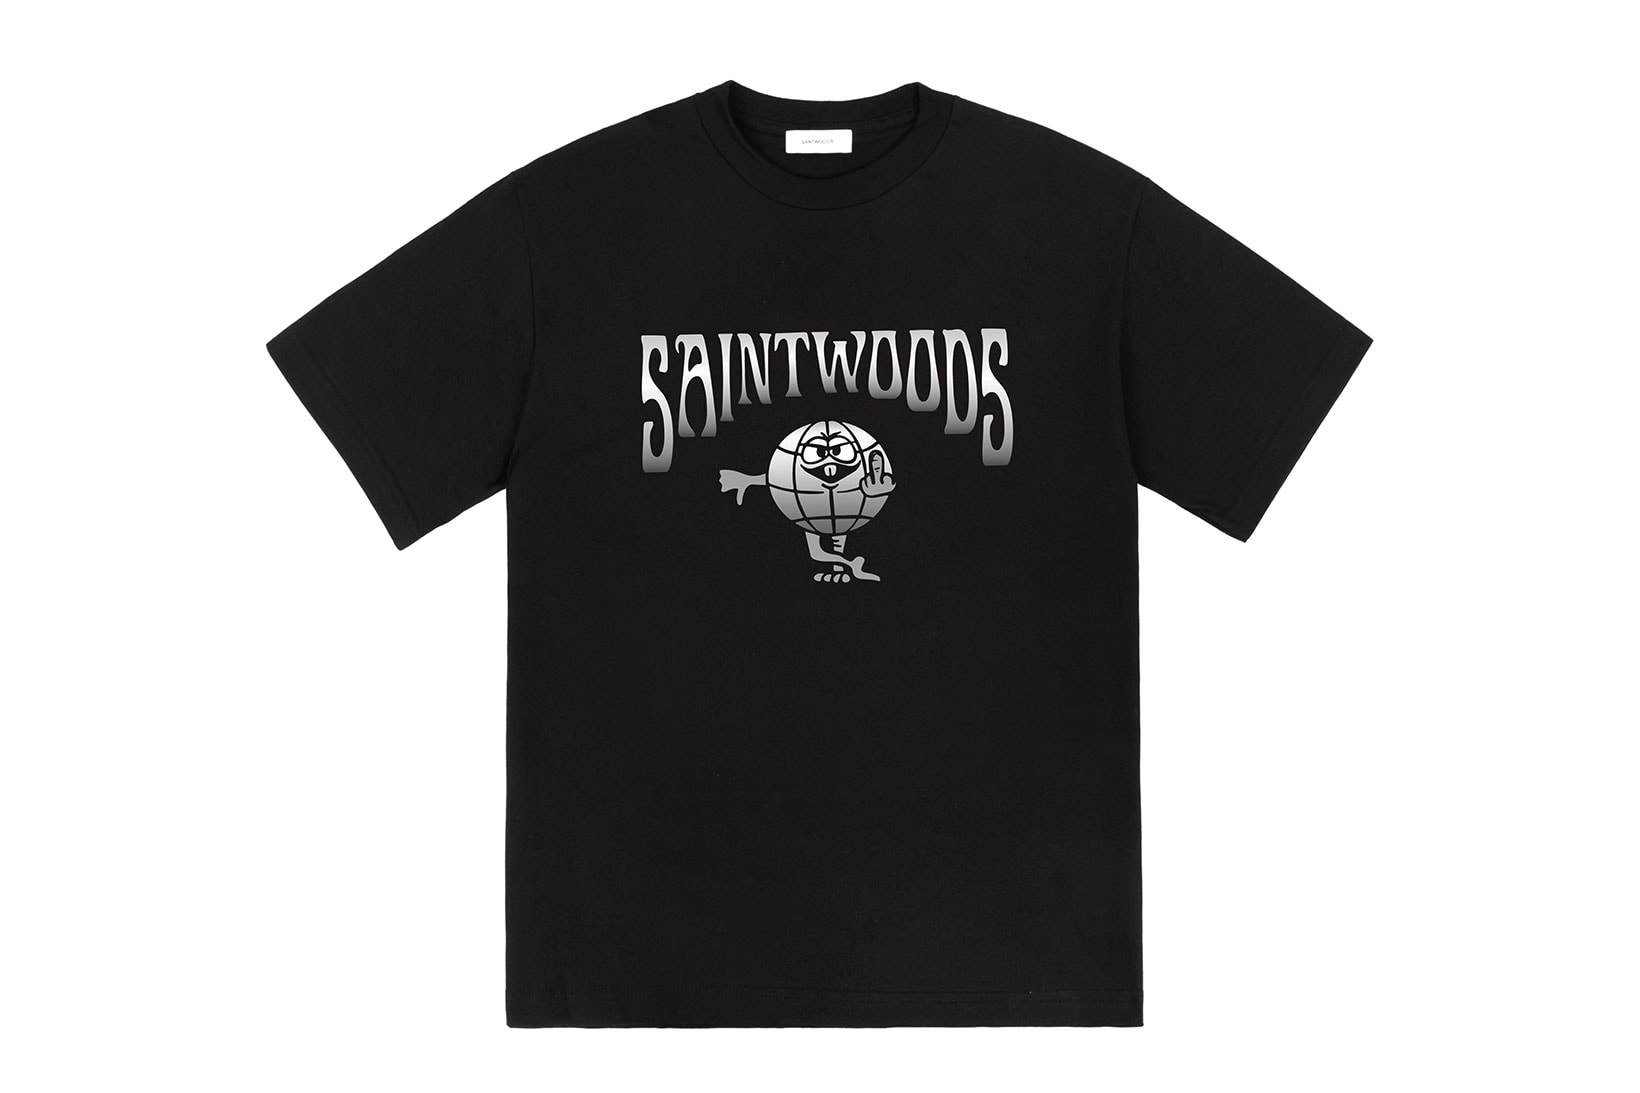 Saintwoods Paris Exclusives Collection Yeah No Tee Shirt